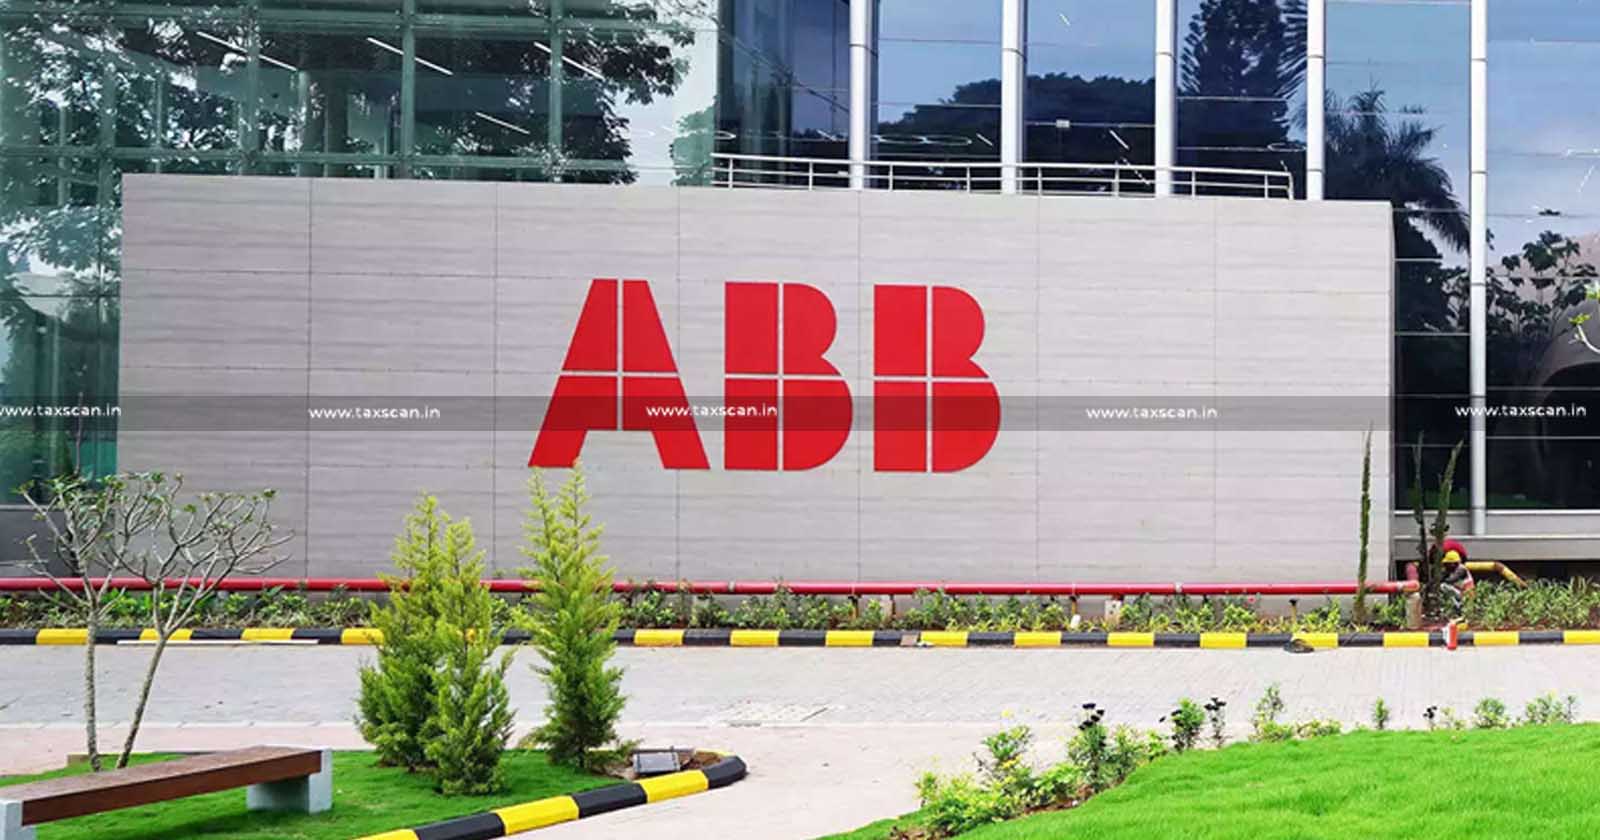 CA Vacancy in ABB - CA Inter Vacancy in ABB - Vacancy in ABB - CA Hiring in ABB - CA Inter Hiring in ABB - Hiring in ABB - taxscan